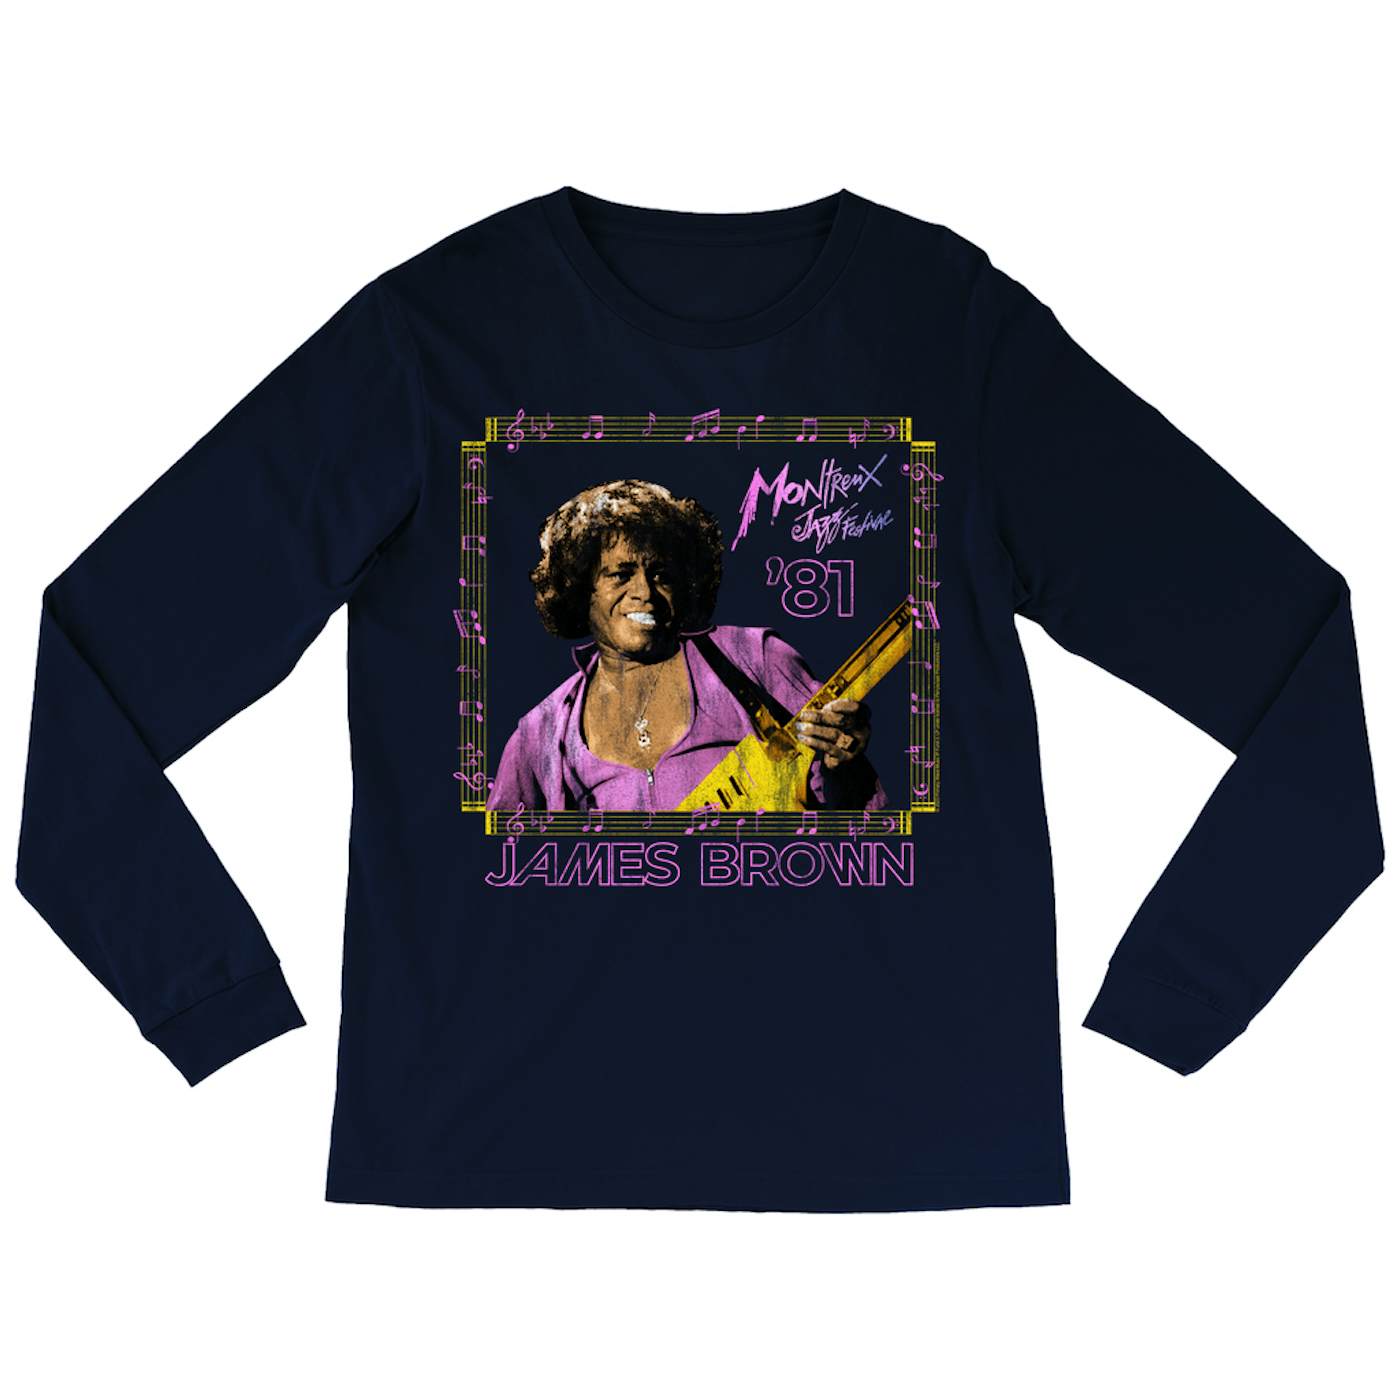 James Brown Long Sleeve Shirt | Montreux Jazz Festival 1981 James Brown Shirt